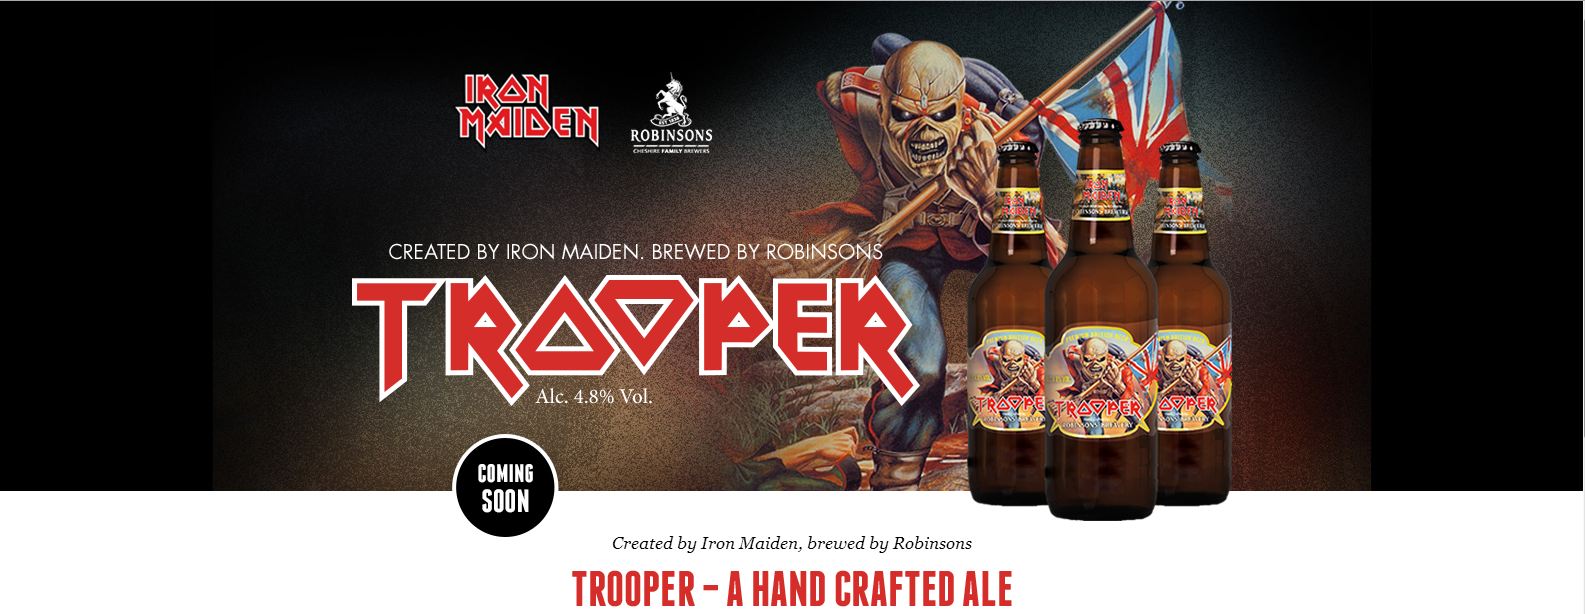 The trooper cerveza de iron maide